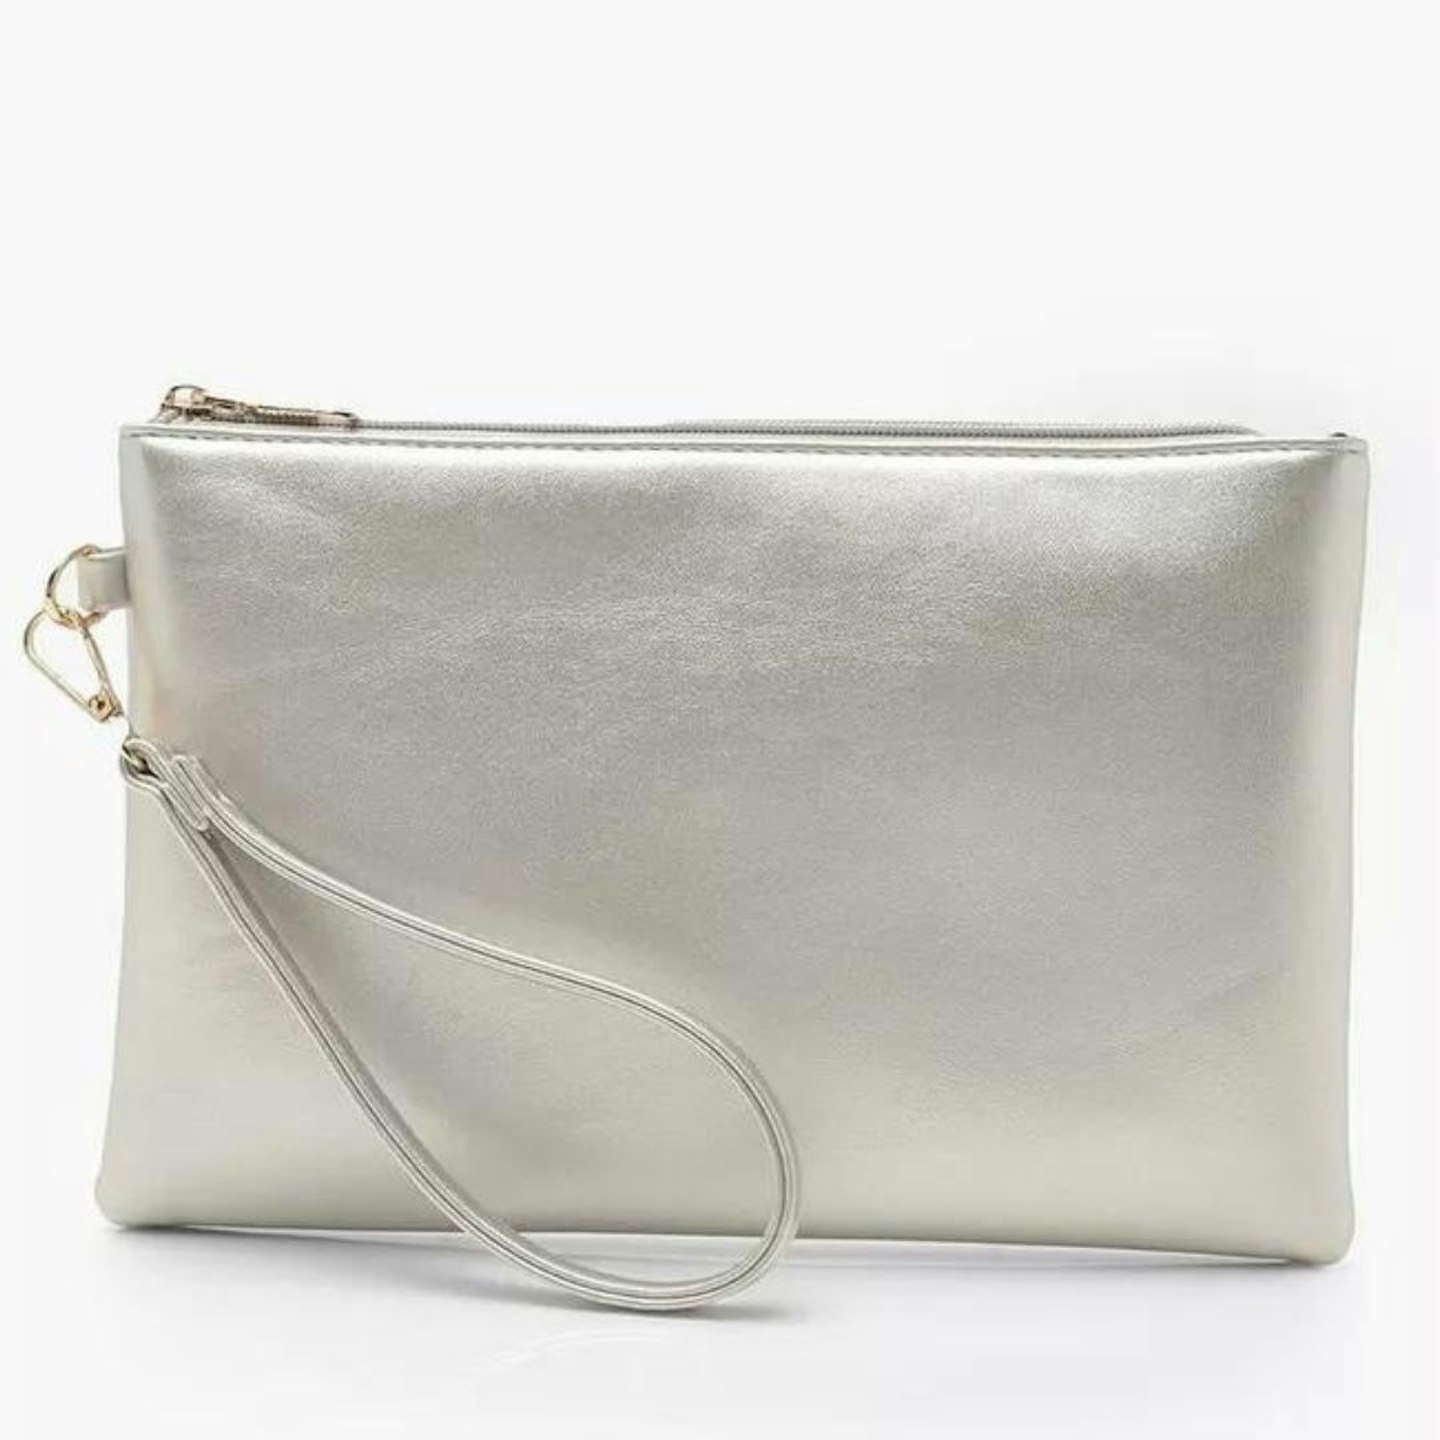 Metallic Smooth Silver Clutch Bag